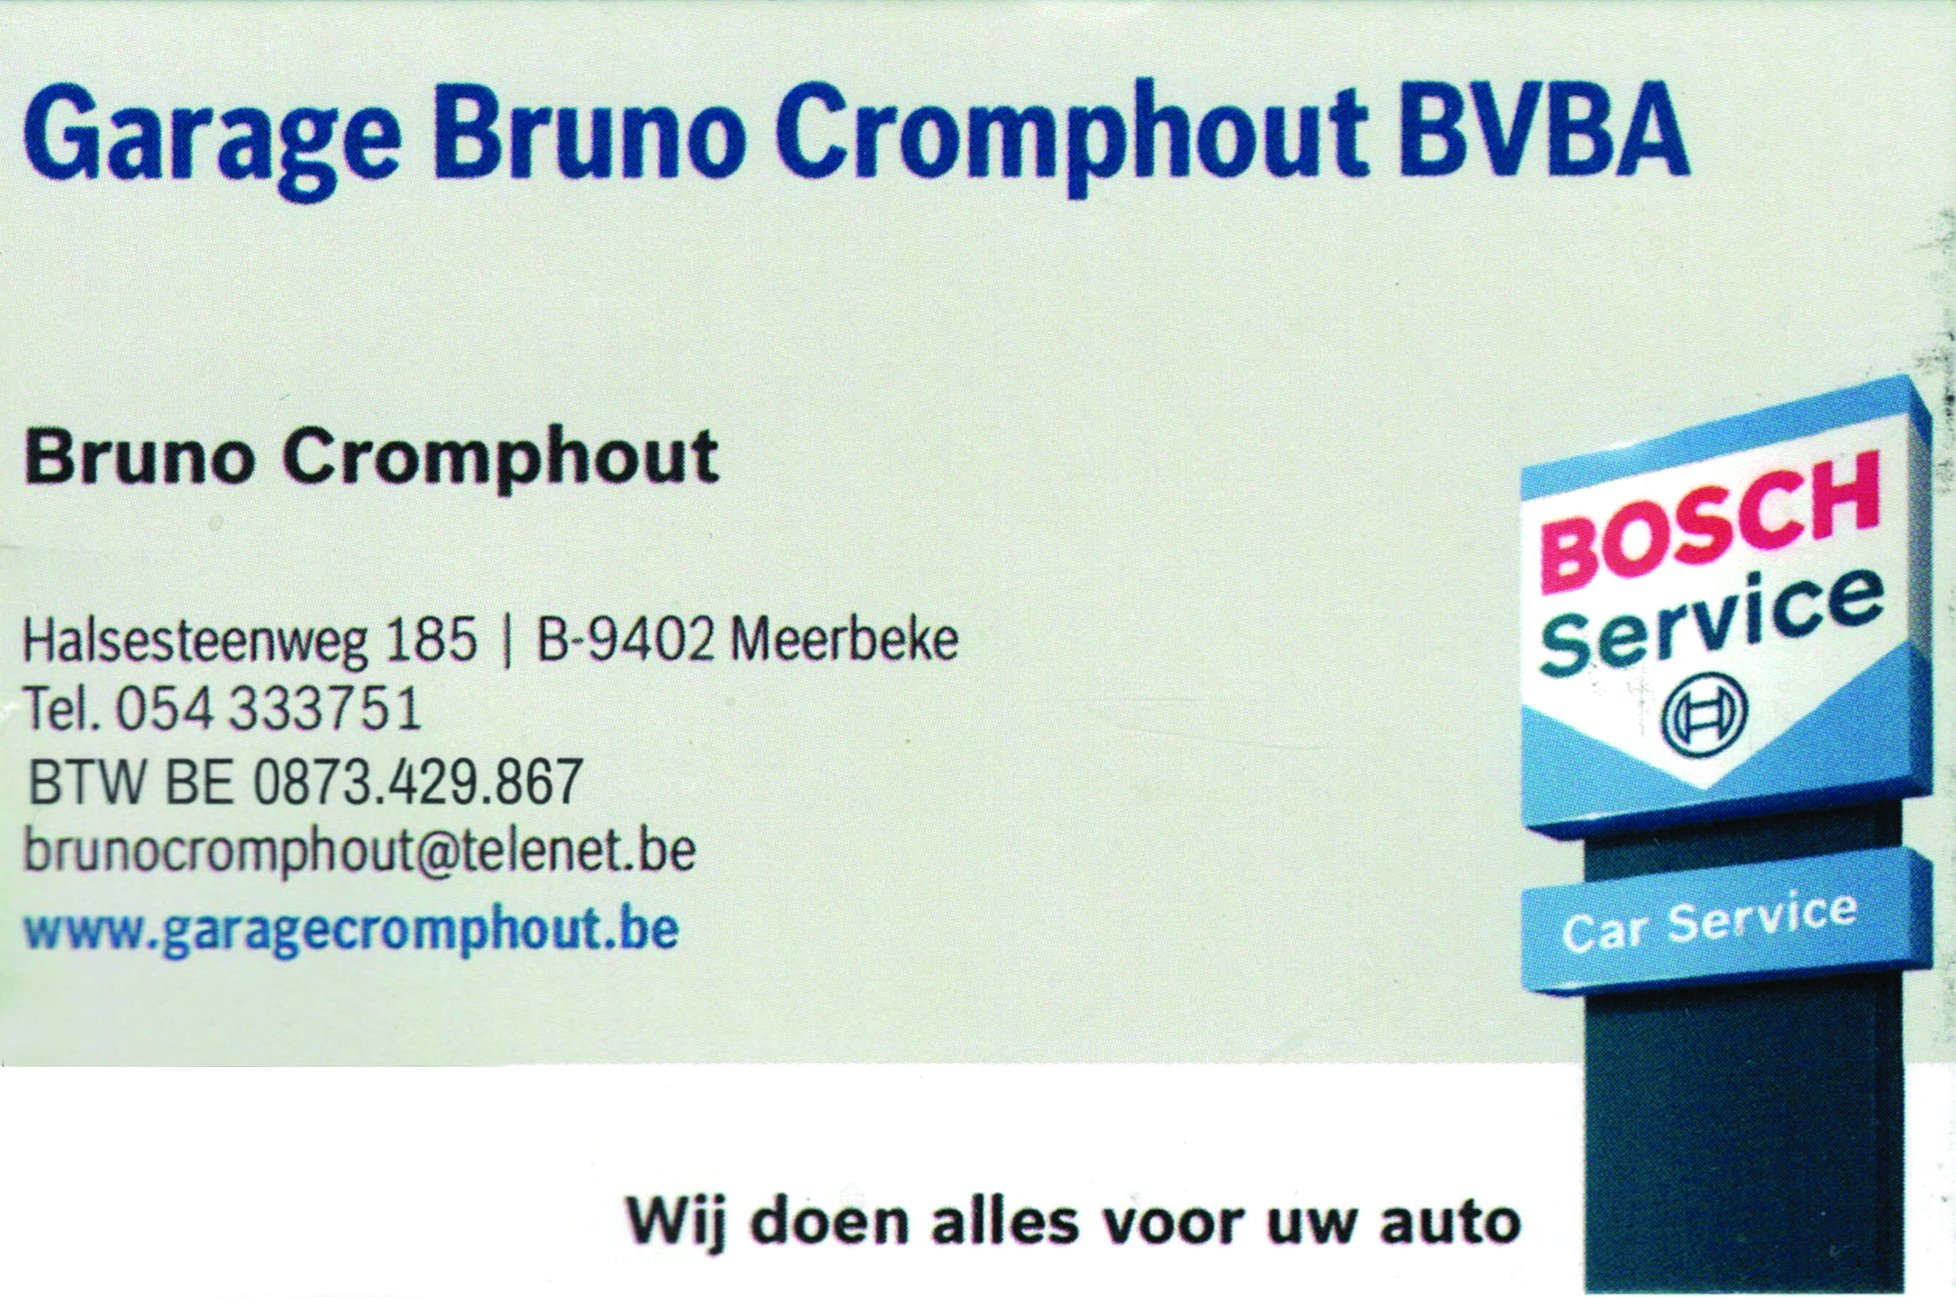 Garage Bruno Cromphout logo